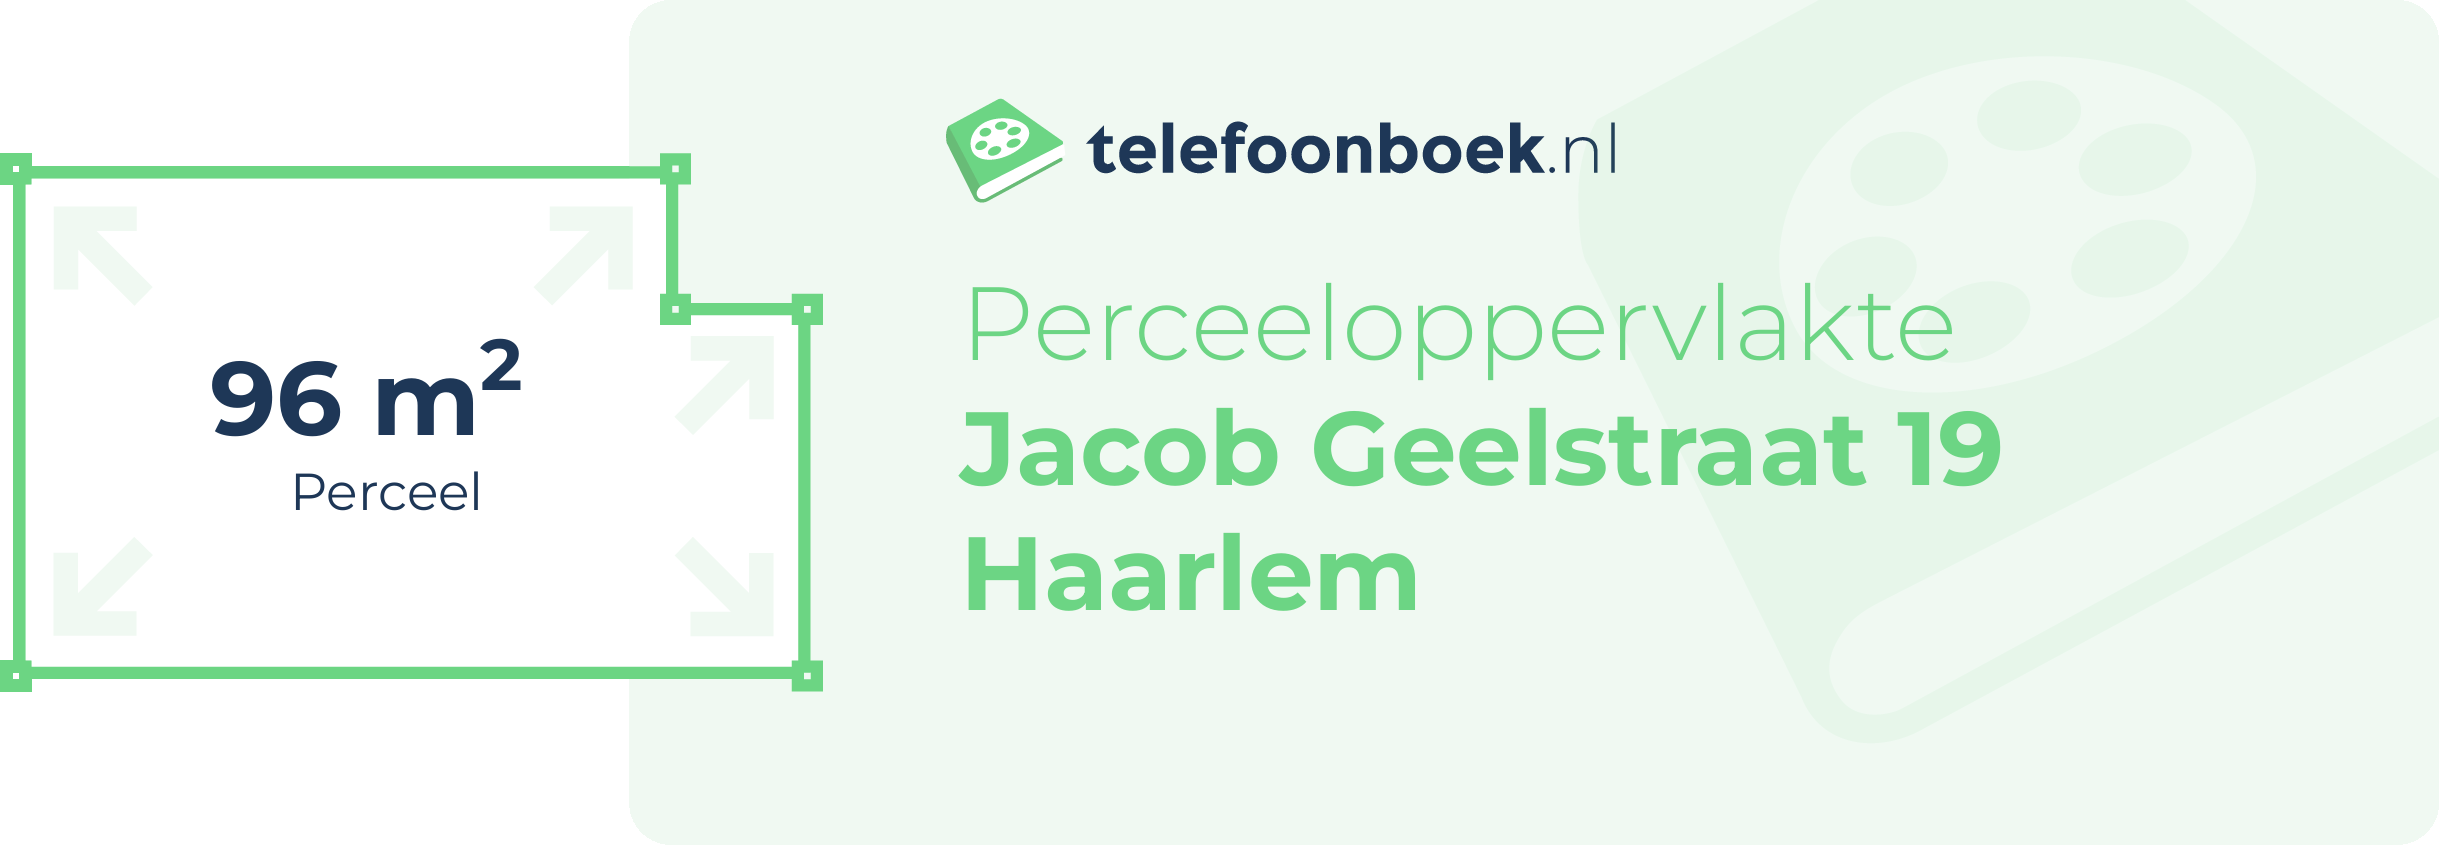 Perceeloppervlakte Jacob Geelstraat 19 Haarlem